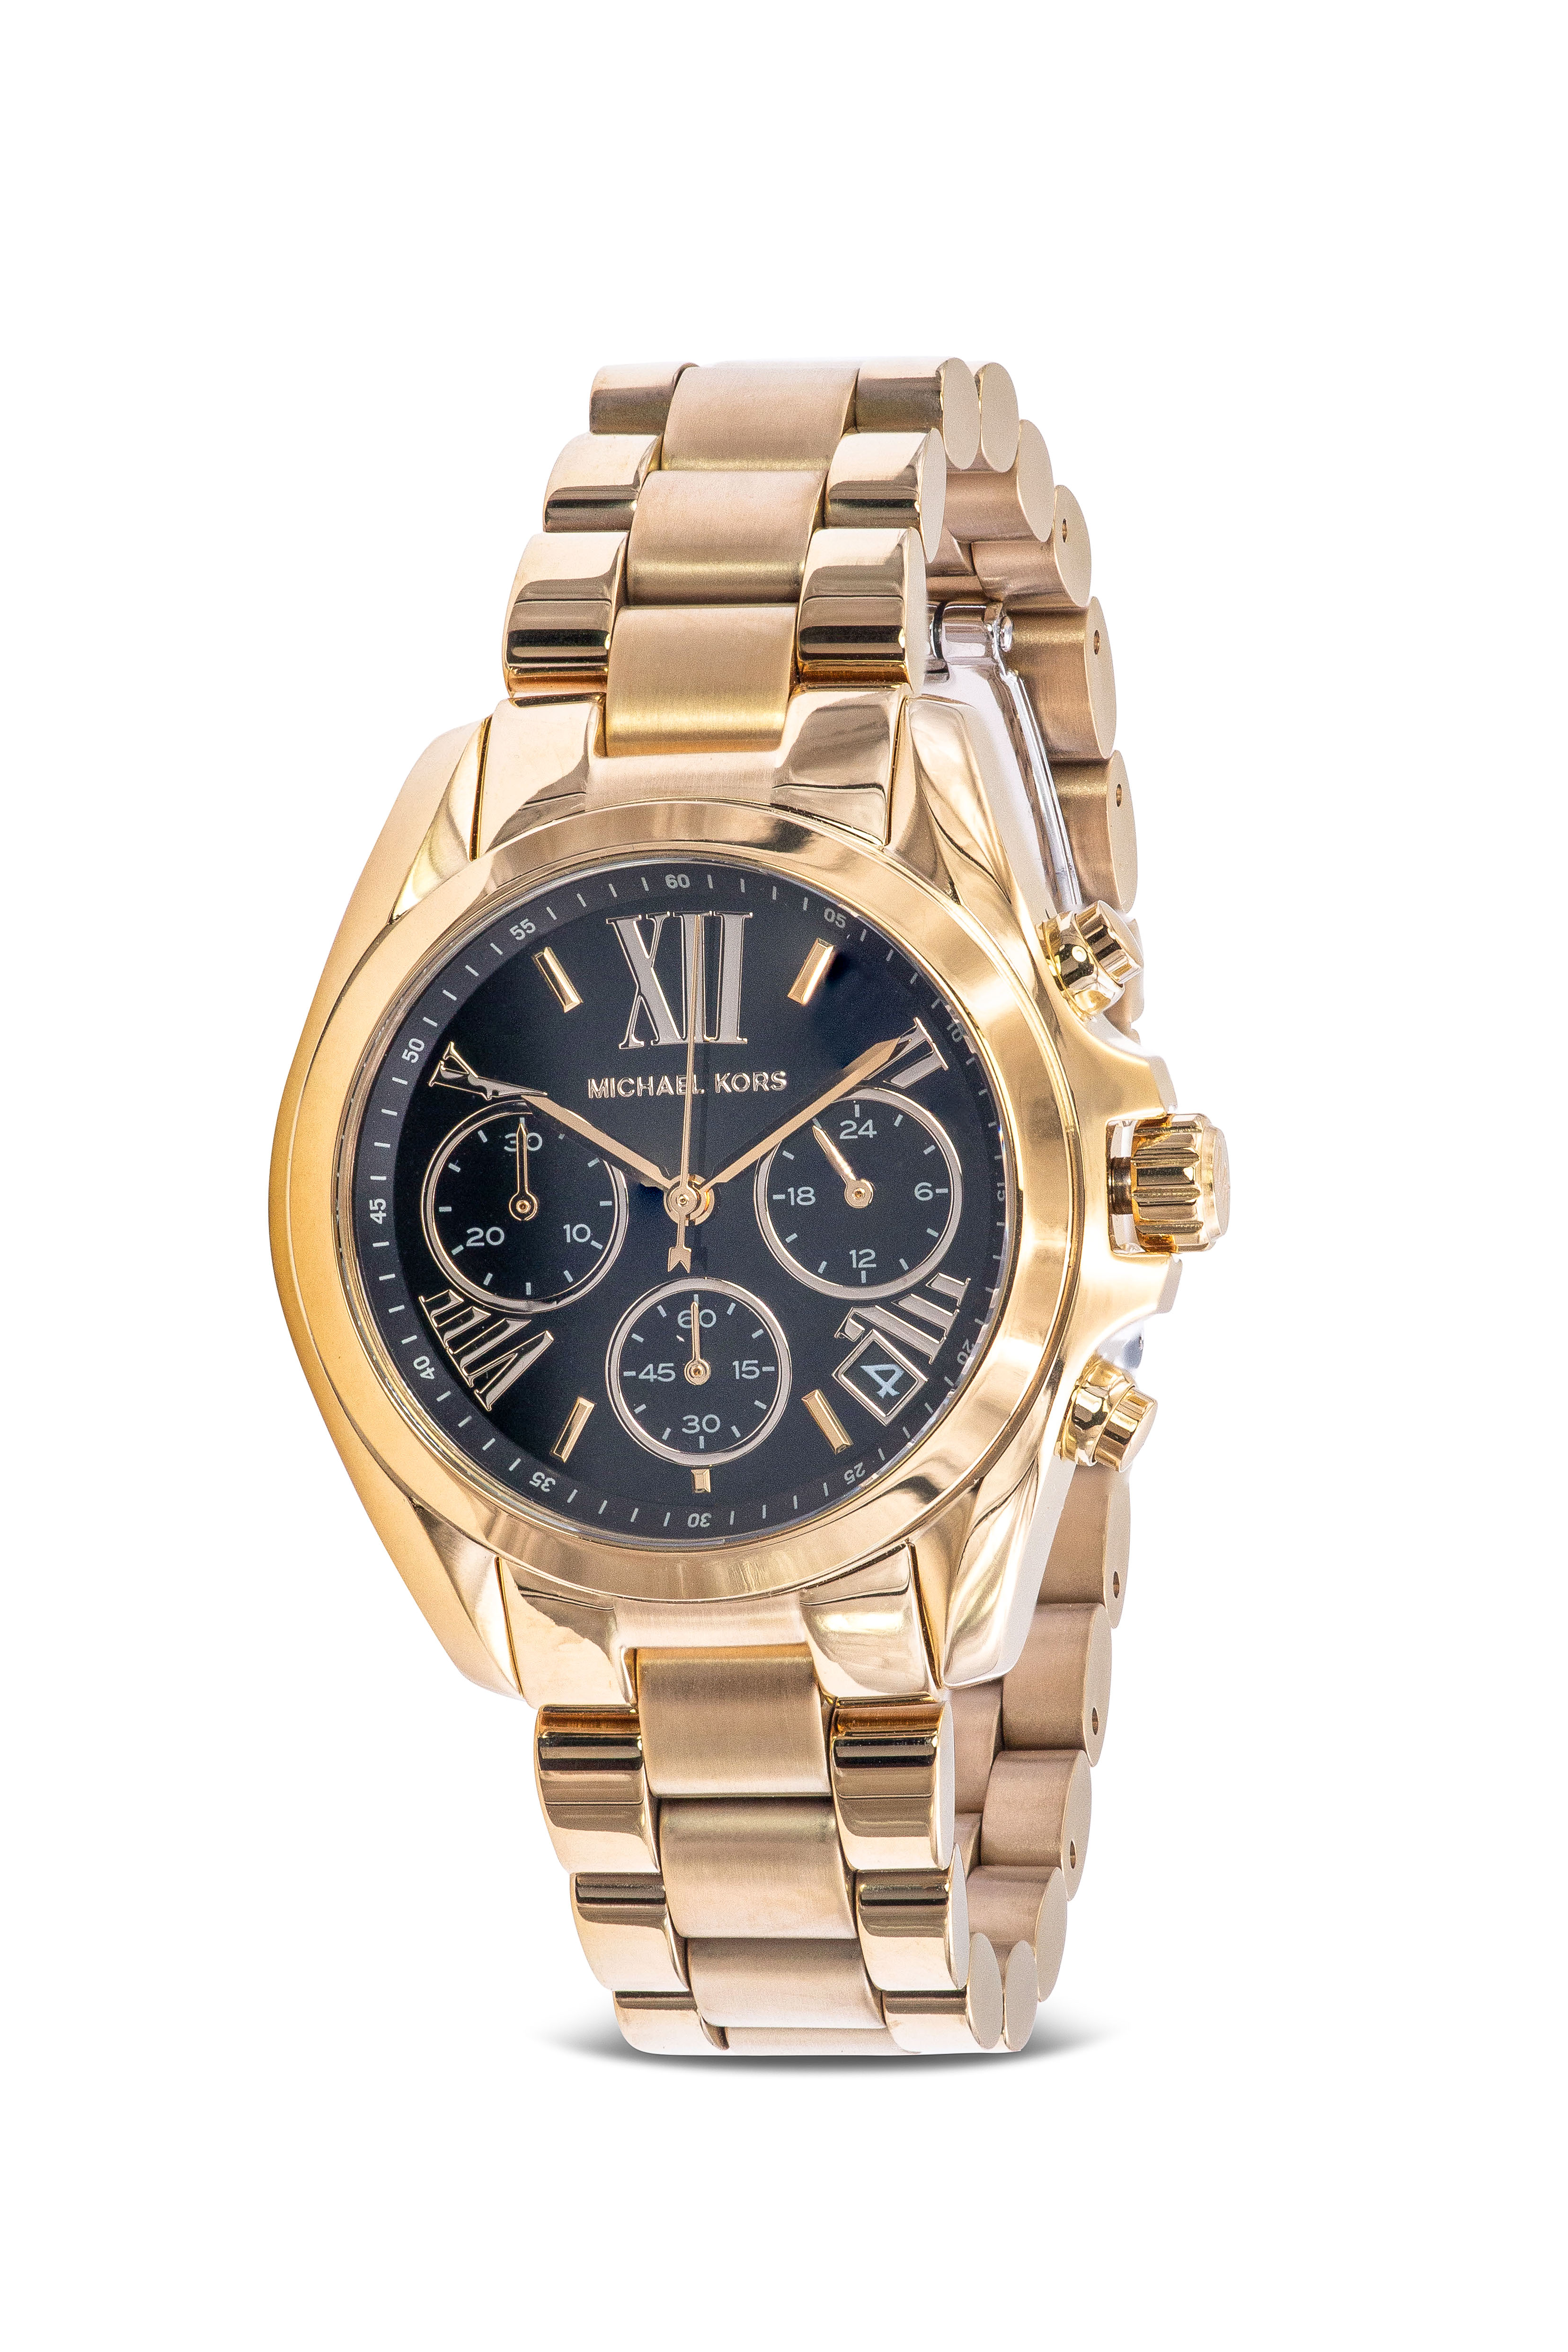 Michael Kors Bradshaw Chronograph Gold-Tone Ladies Watch MK6959